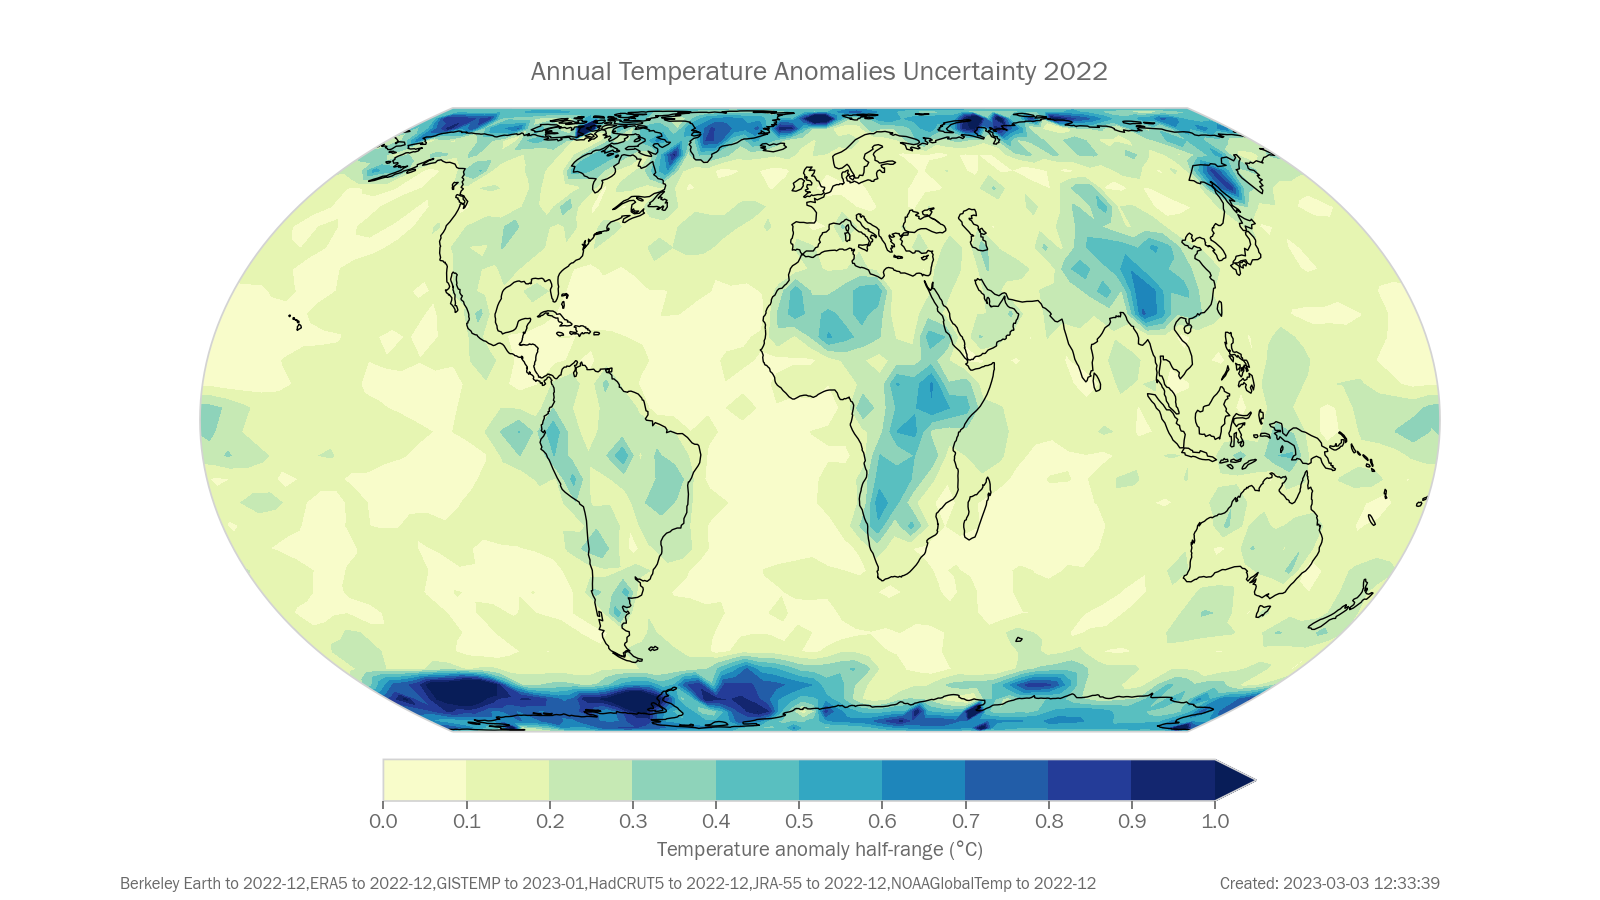 Annual Near surface temperature uncertainty (°C)  for 2022. Data shown are the half-range of the following six data sets: Berkeley Earth, ERA5, GISTEMP, HadCRUT5, JRA-55, NOAAGlobalTemp.